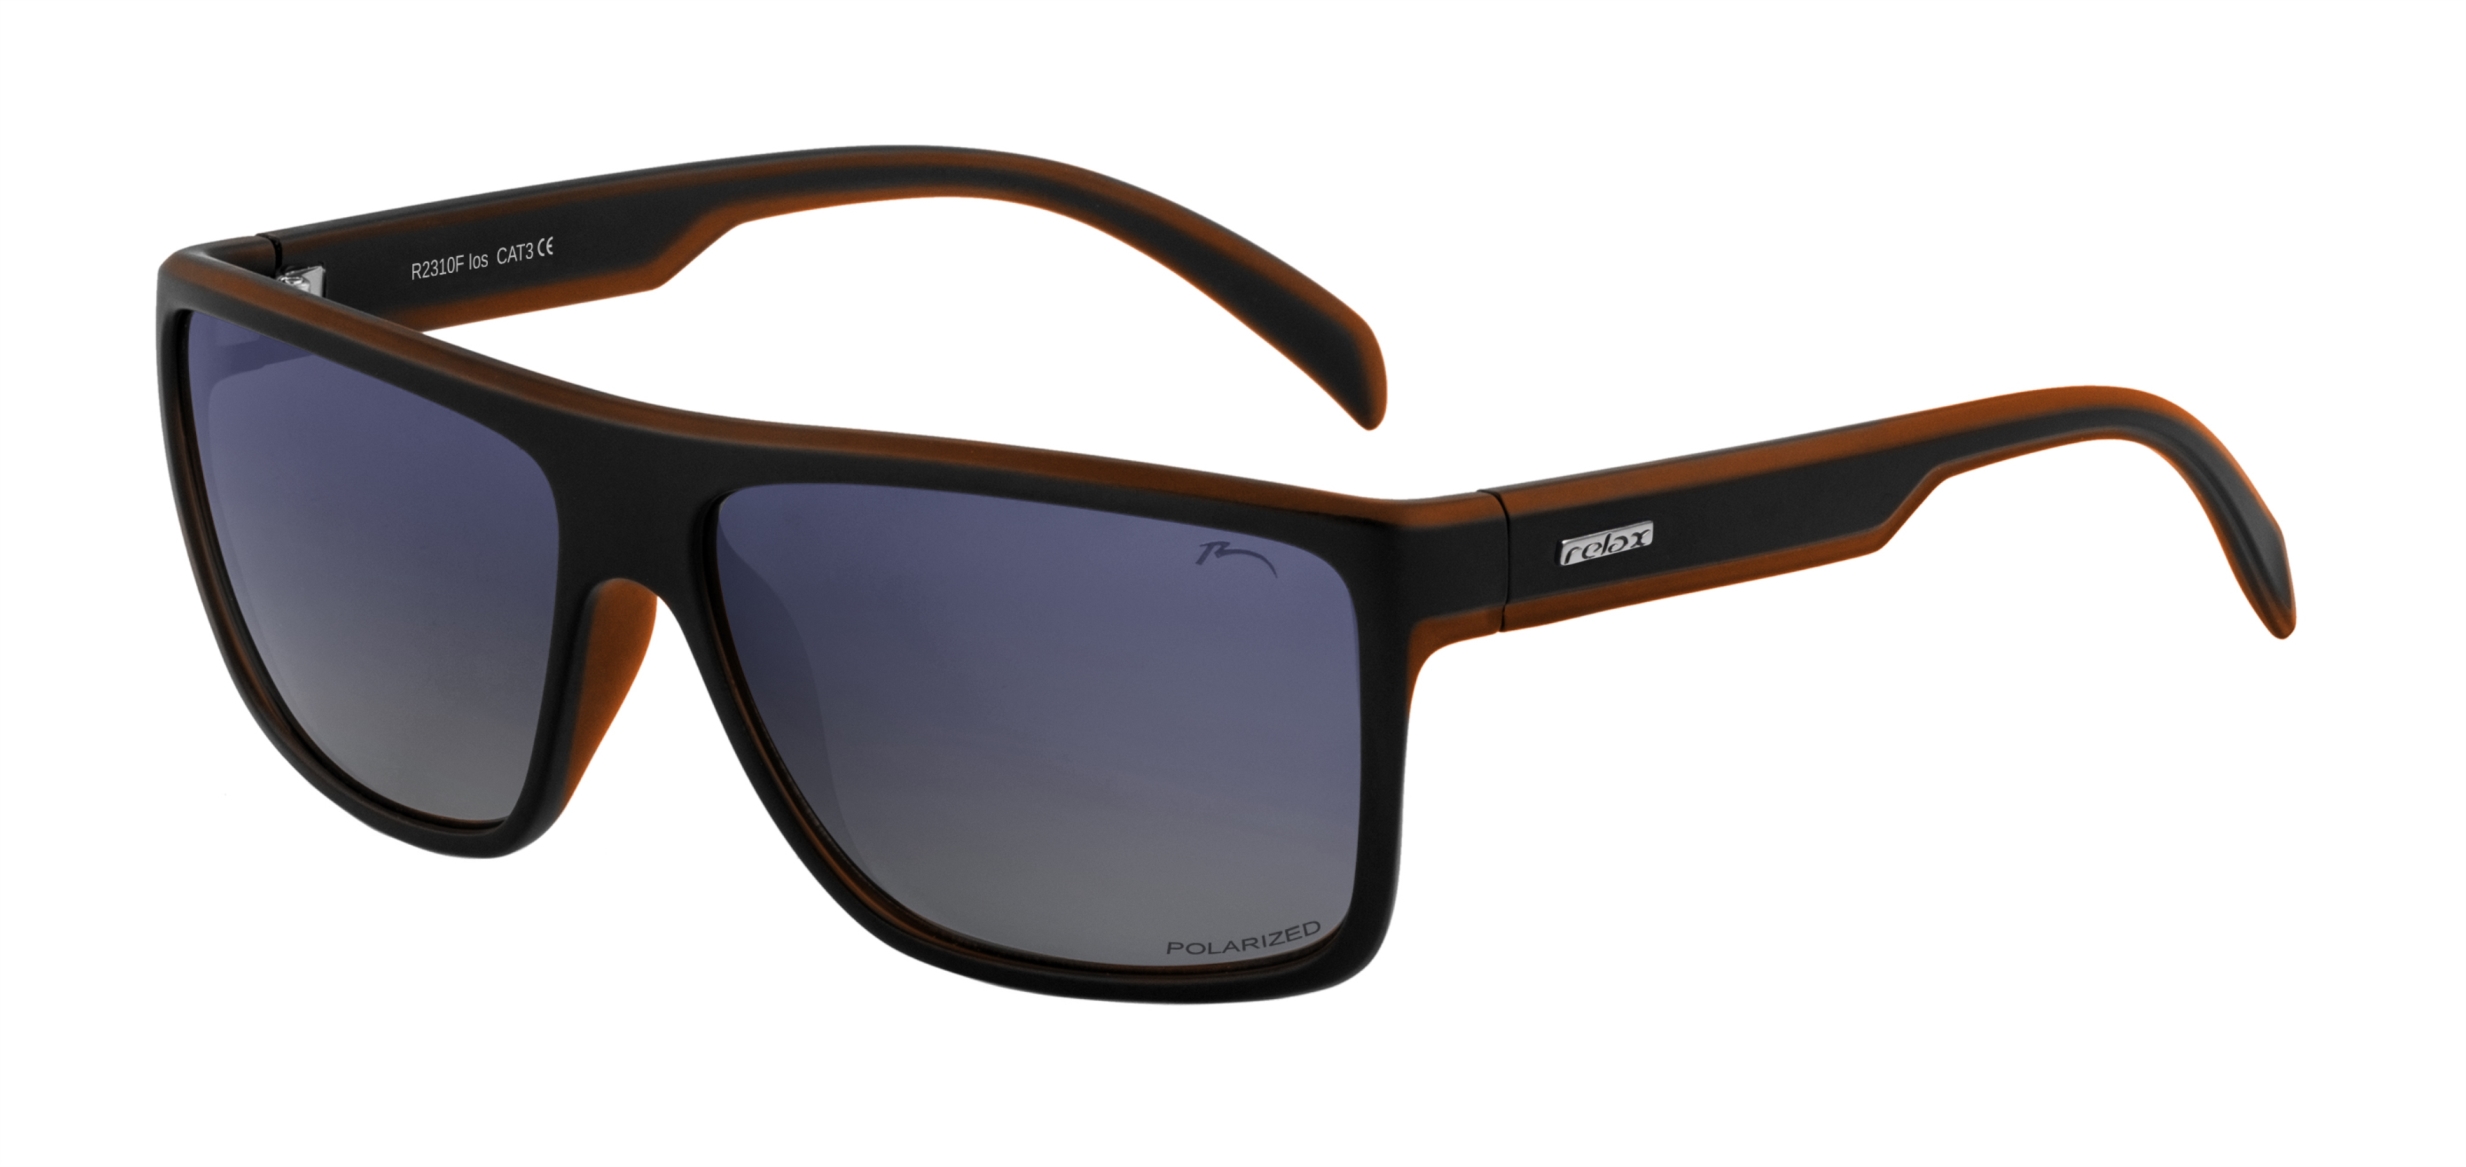 Polarized sunglasses  Relax Ios  R2310F standard